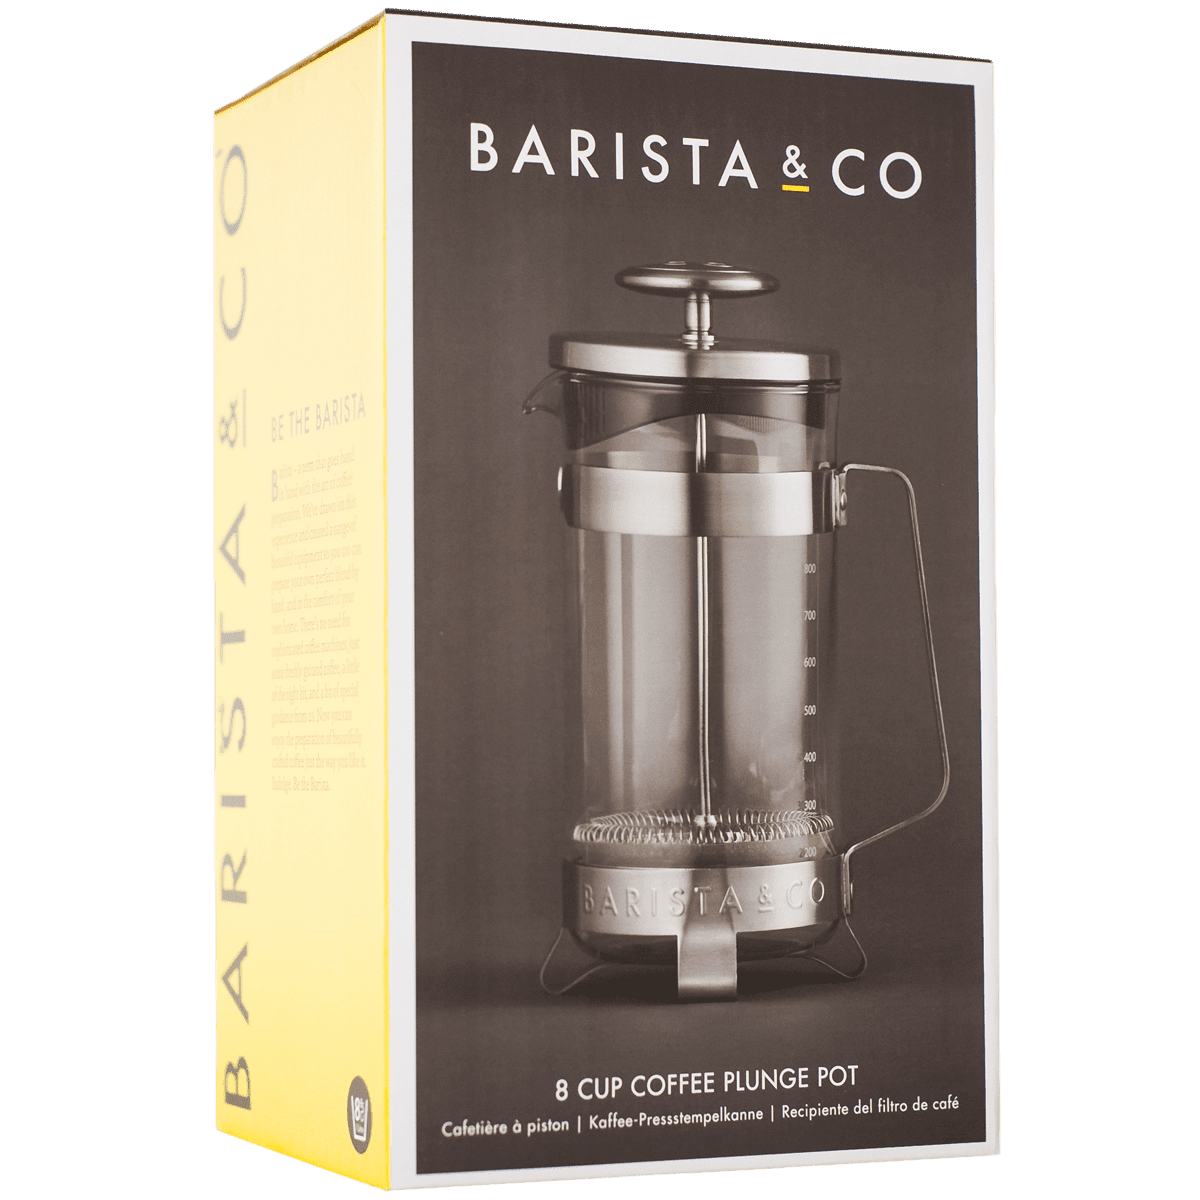 Barista and Co boxed coffee press